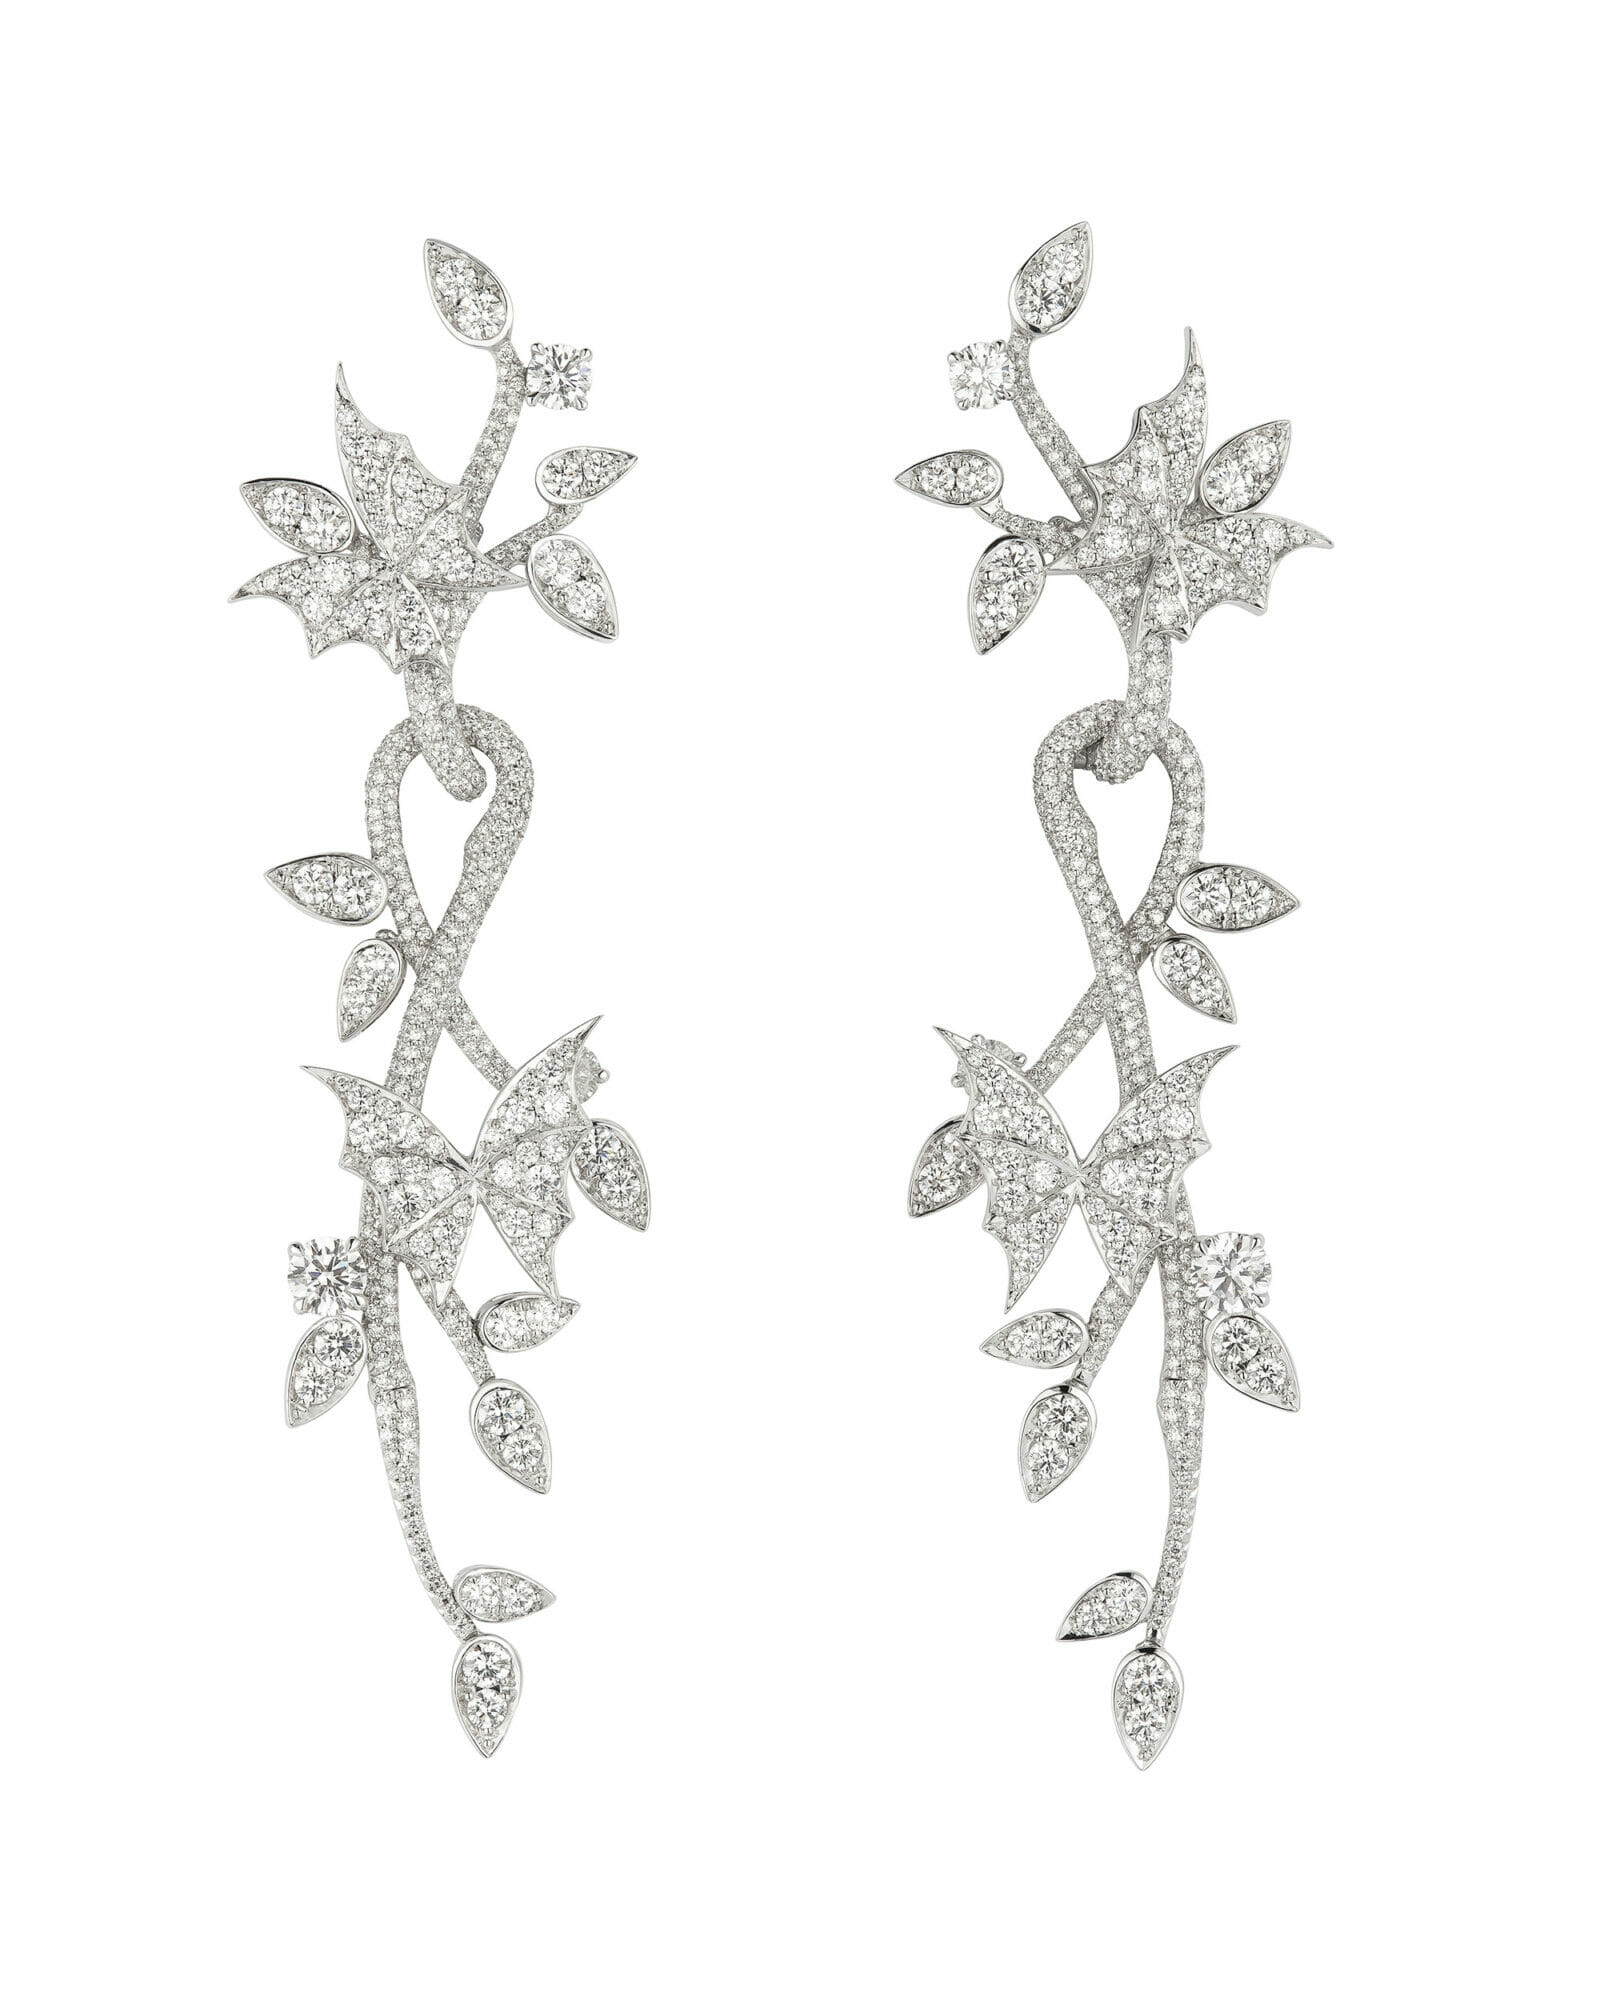 stephen webster works british jewelry designers diamonds earrings